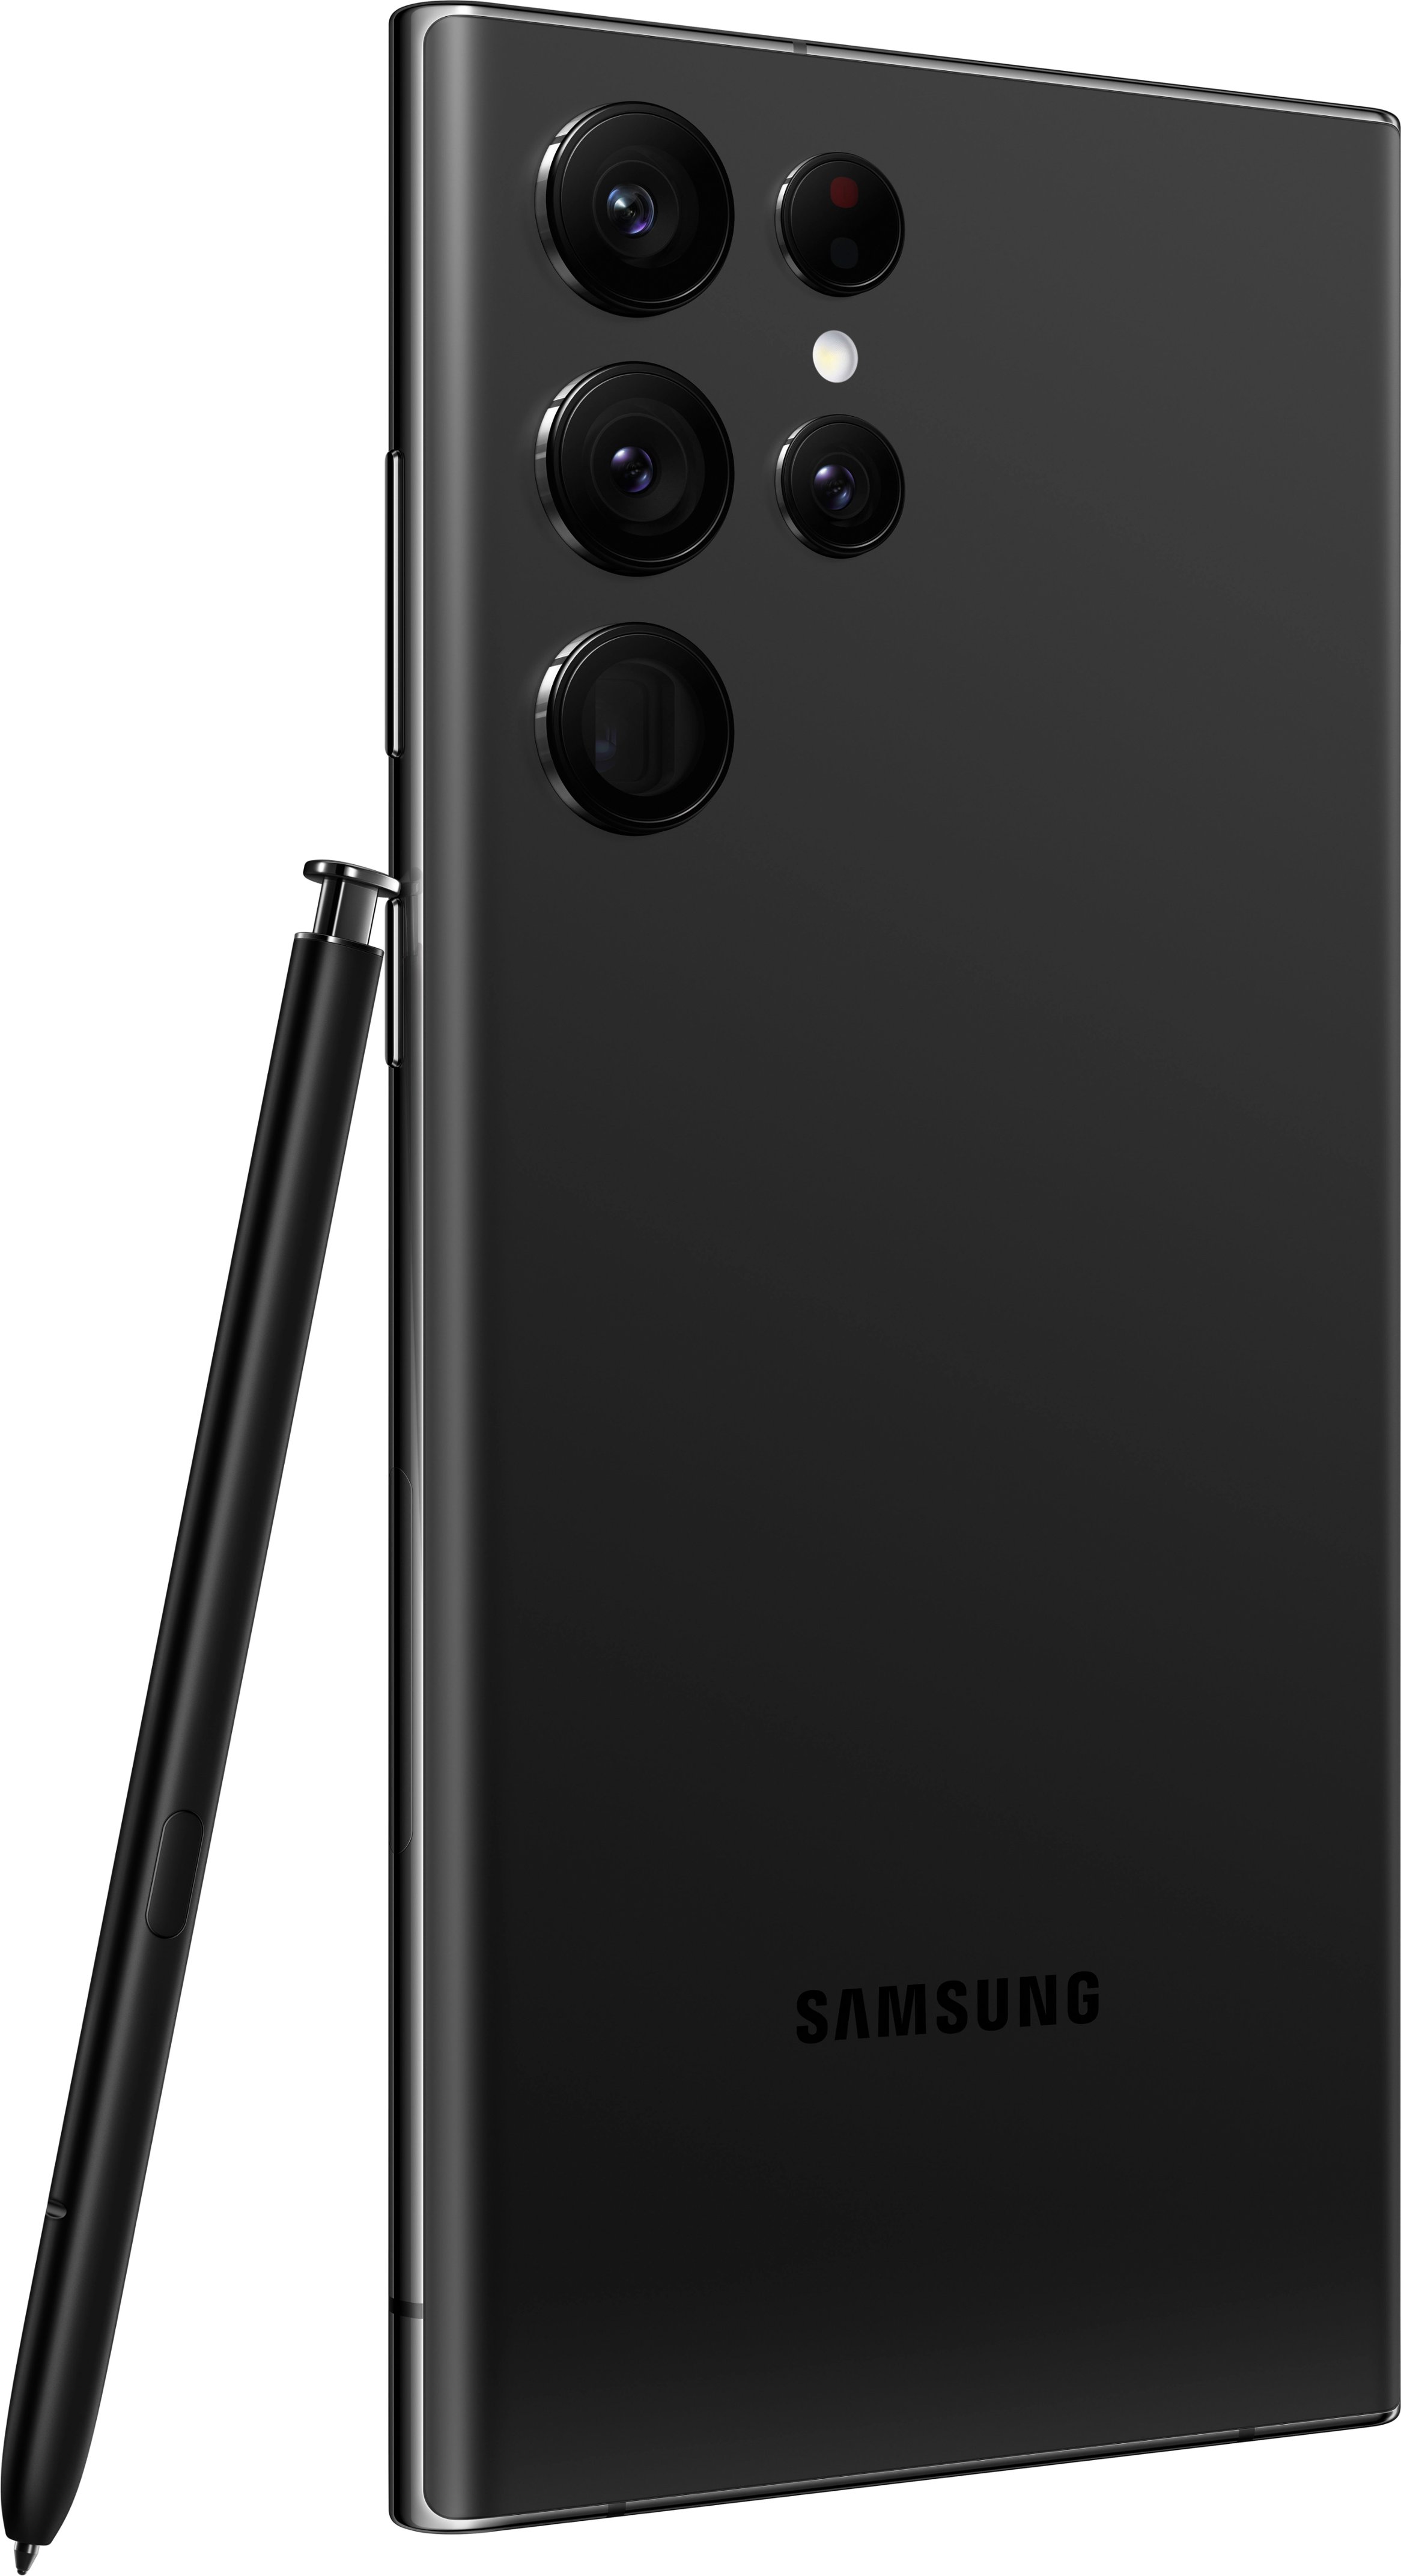 Samsung Galaxy S22 Ultra - 128GB - Phantom Black - Unlocked